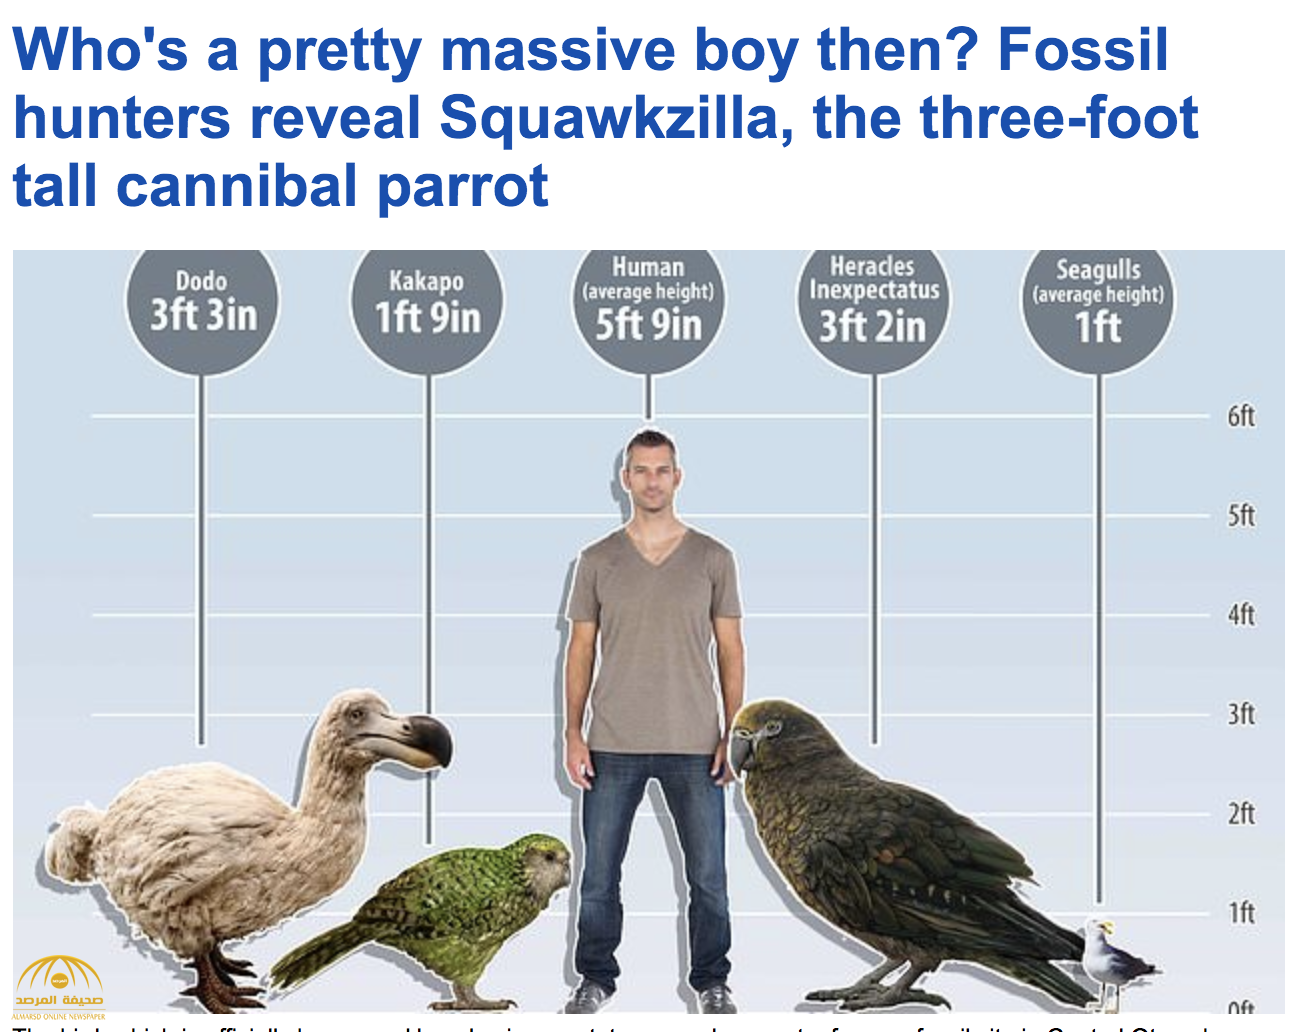 اكتشاف طائر  ببغاء  "عملاق" عاش قبل 19 مليون سنة!